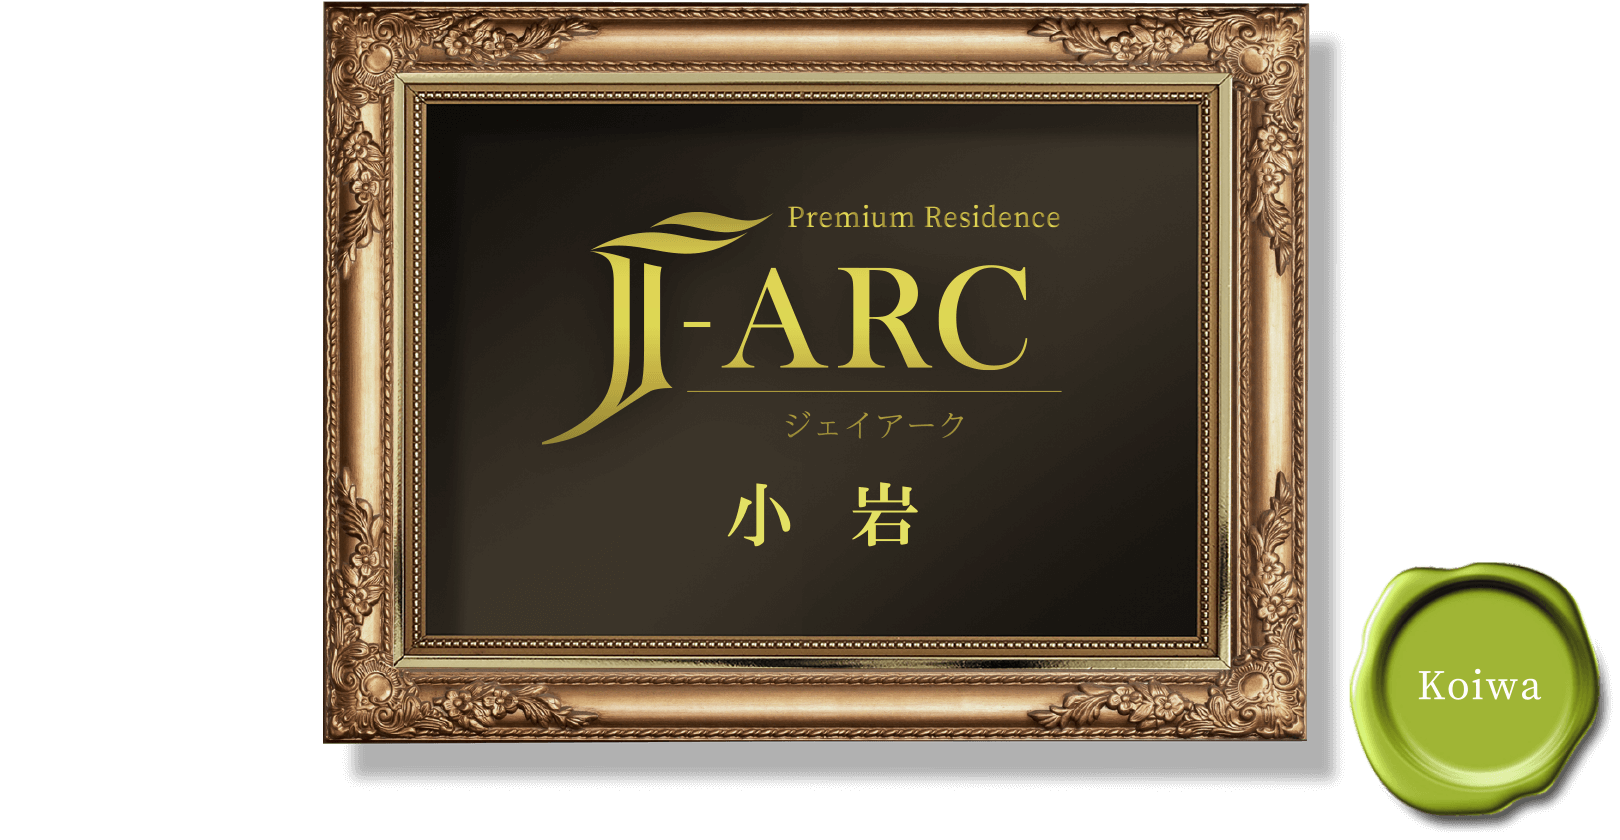 Premium Residence J-ARC 小岩